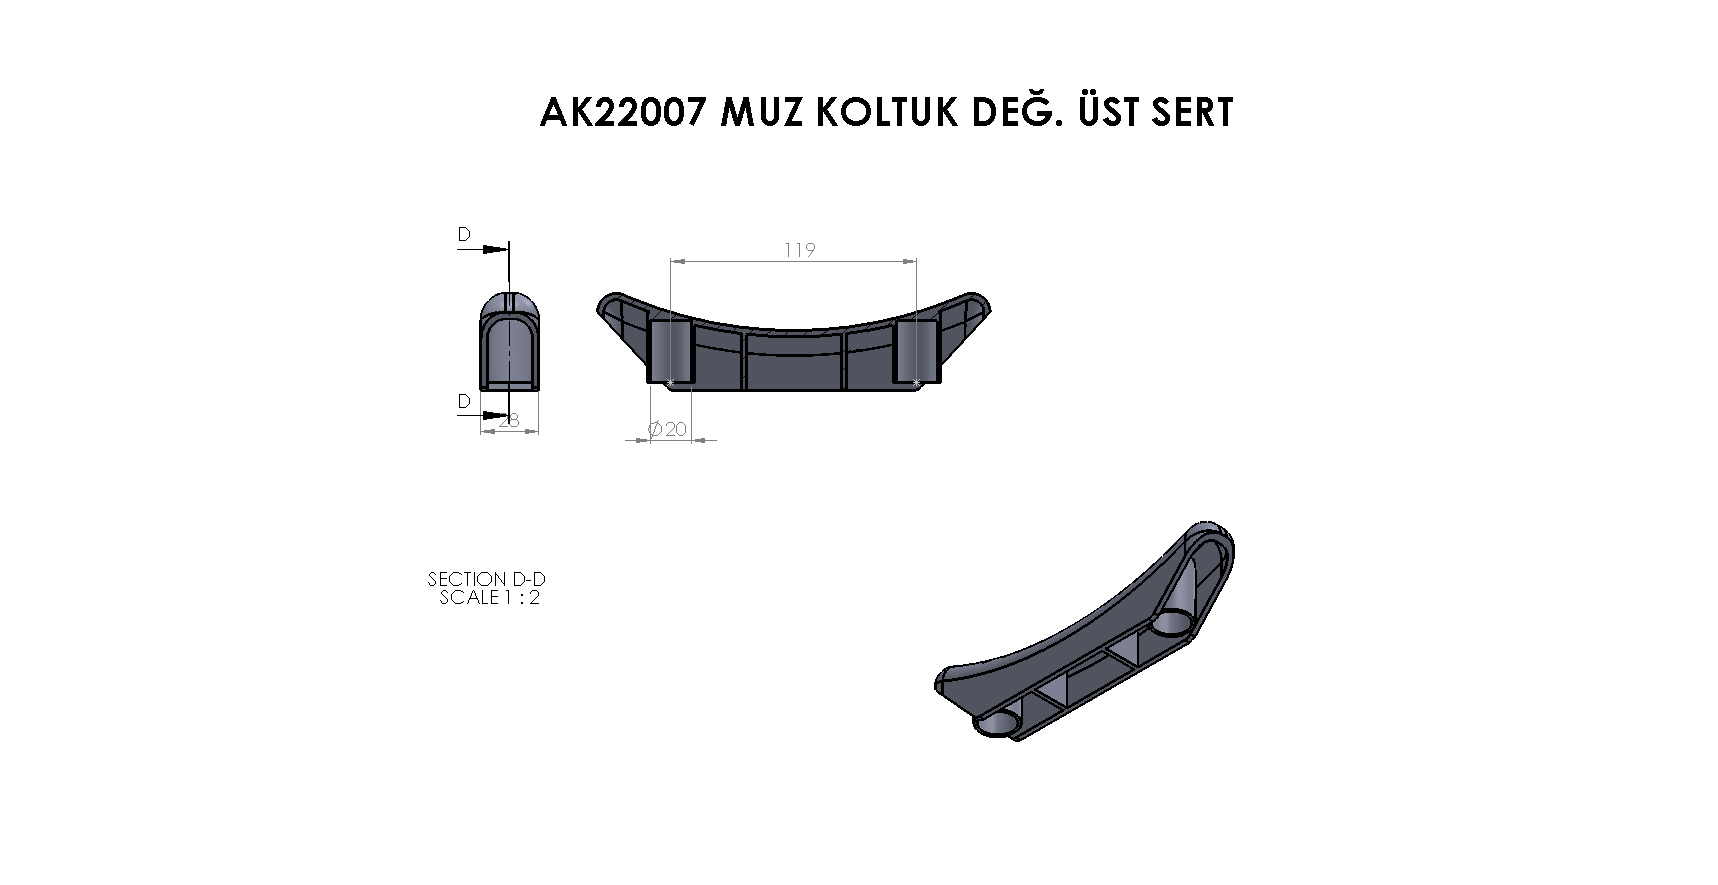 AK22007 Muz Koltuk Değneği Üst Sert Adem Koç Plastik